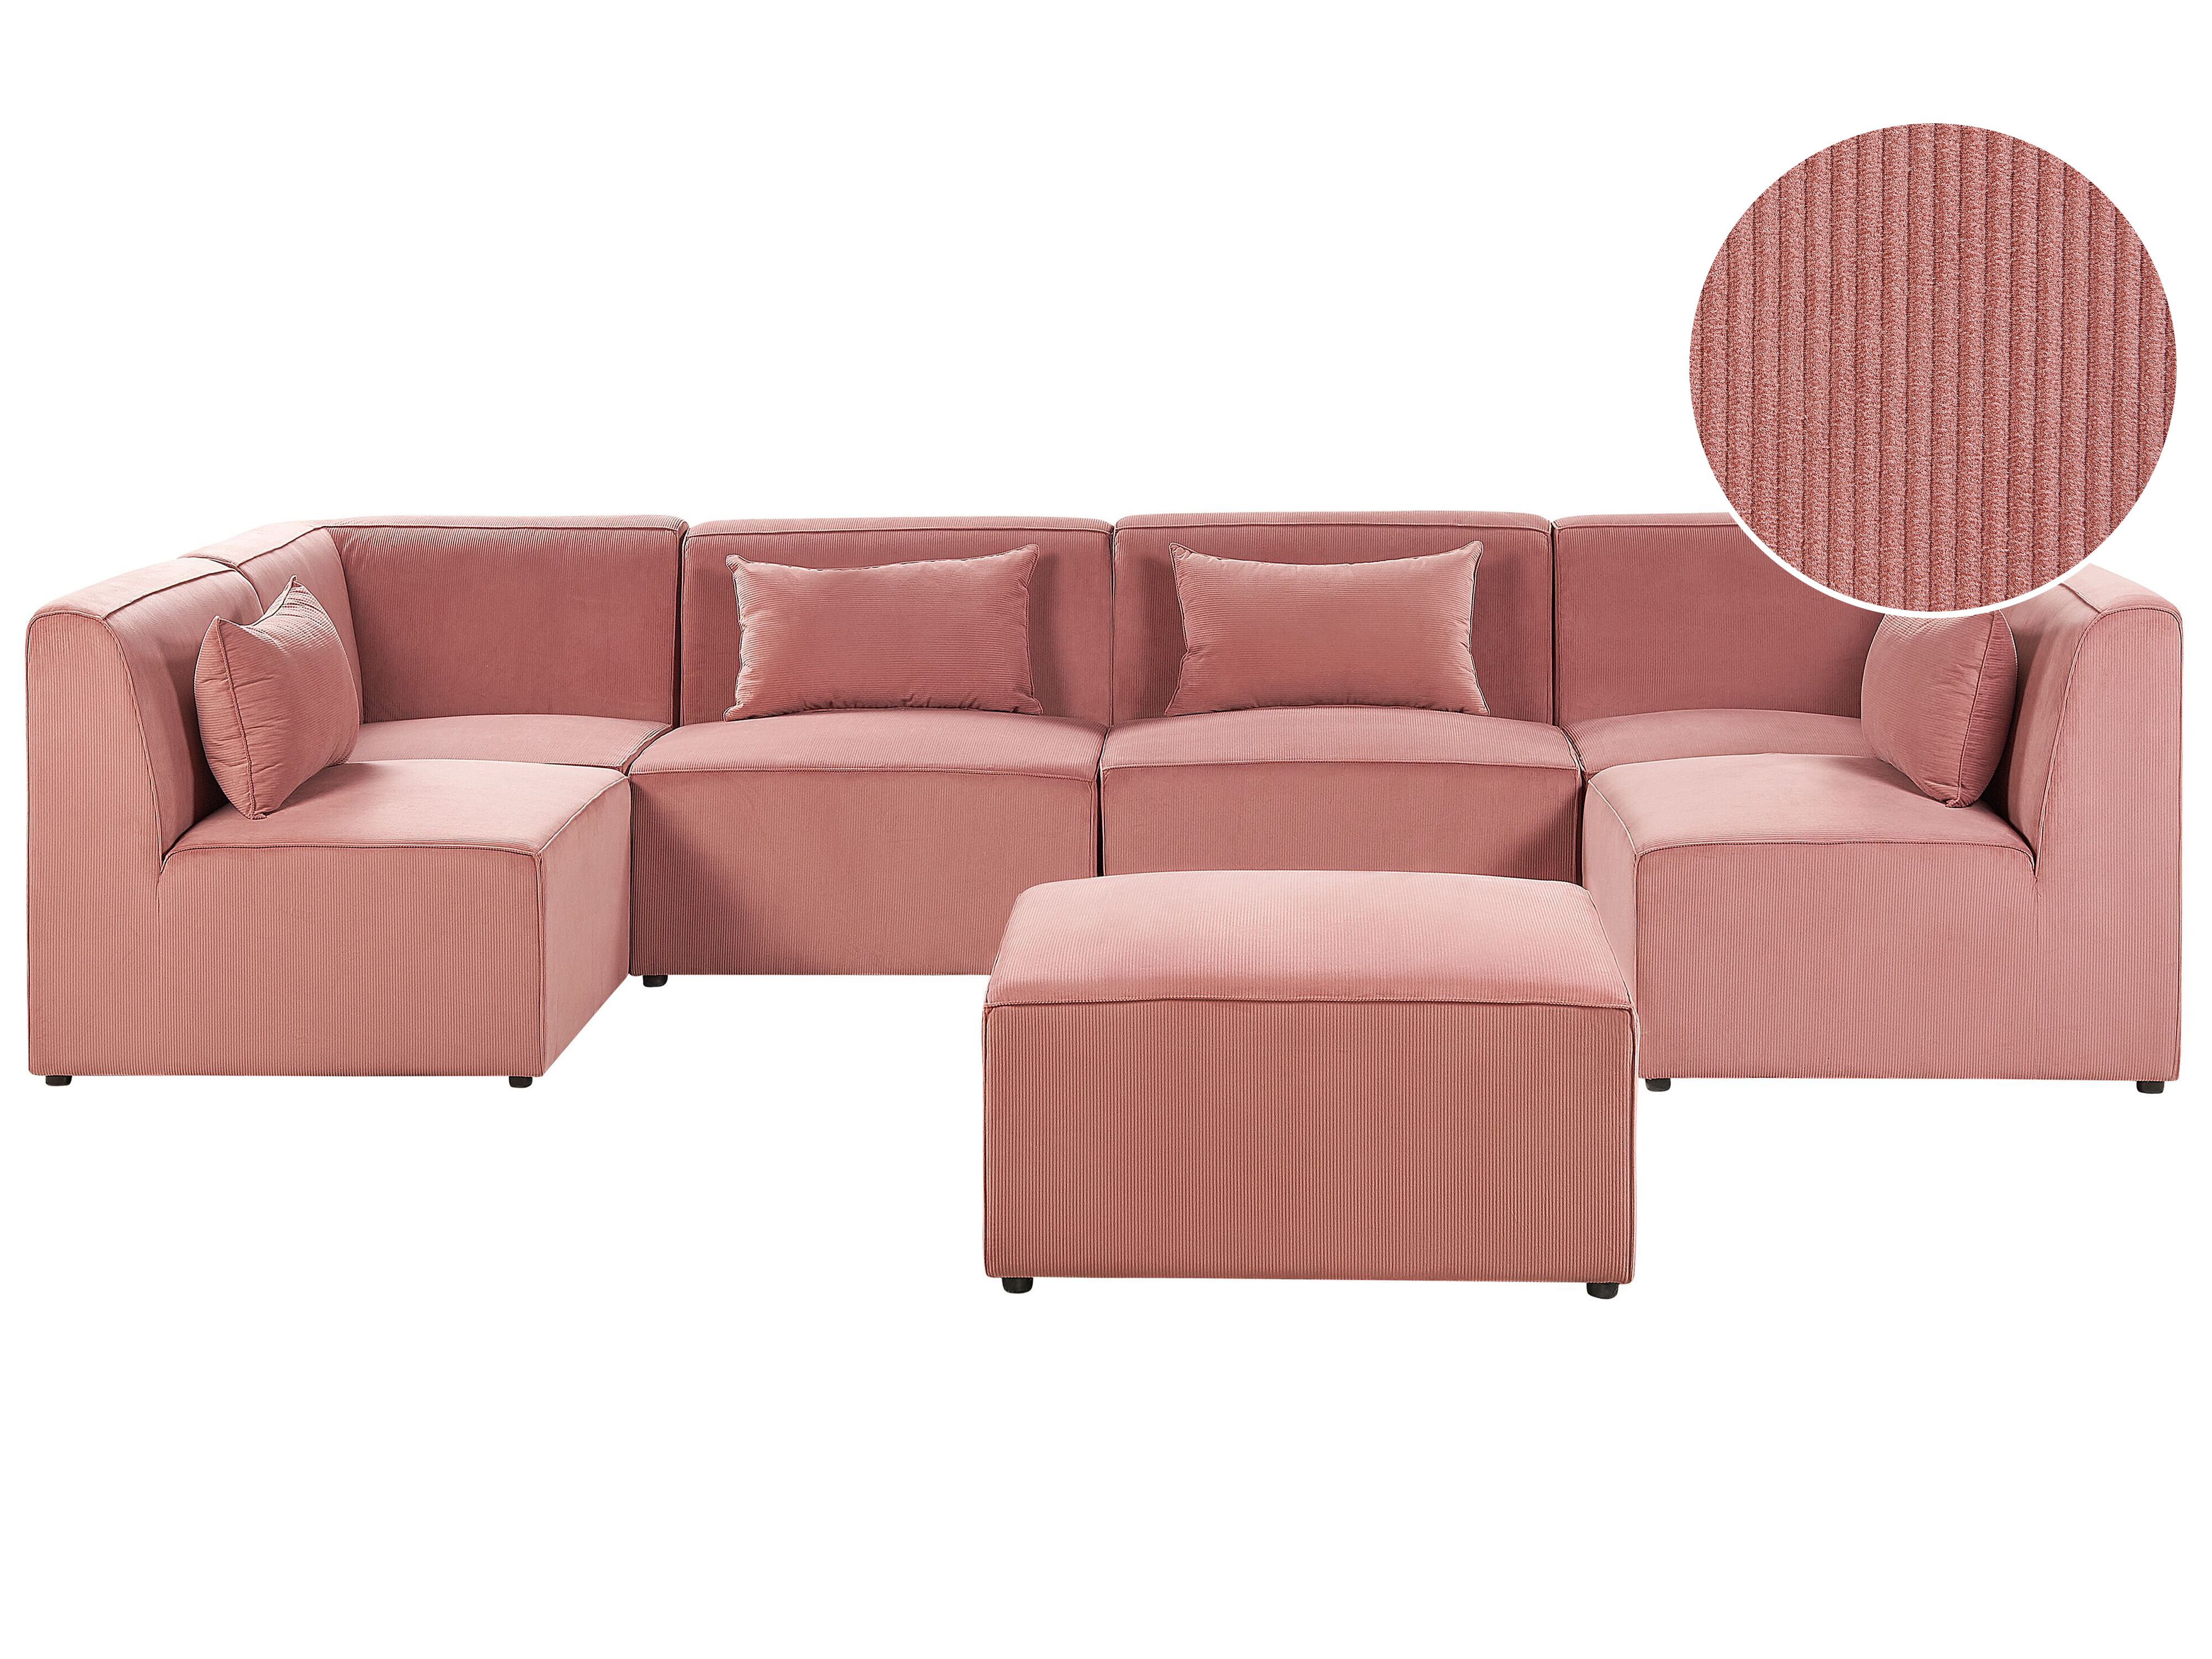 6 Seater U-Shaped Modular Jumbo Cord Sofa with Ottoman Pink LEMVIG |  Beliani.dk